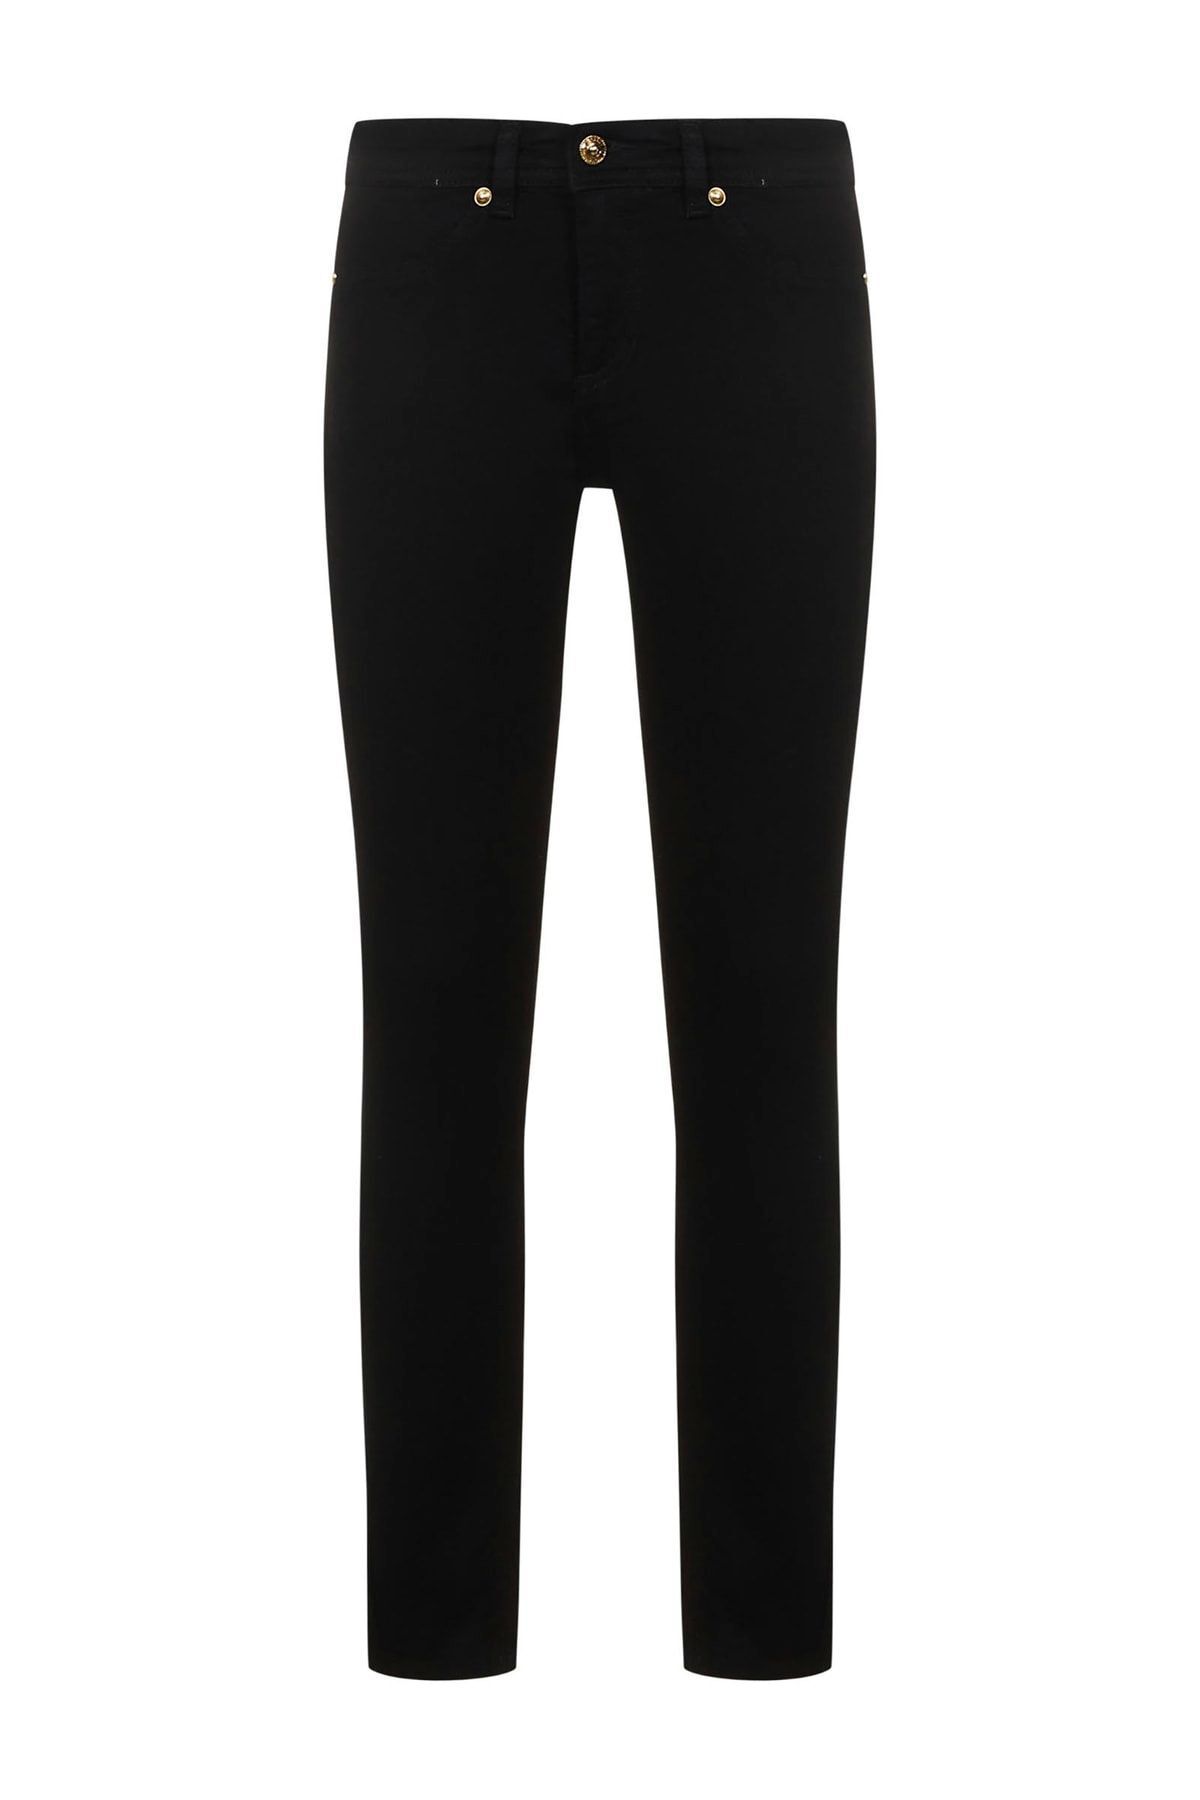 Versace Kadın Yüksek Bel Slim Rahat Siyah Pantolon 73hab5j2 Cdw00-909